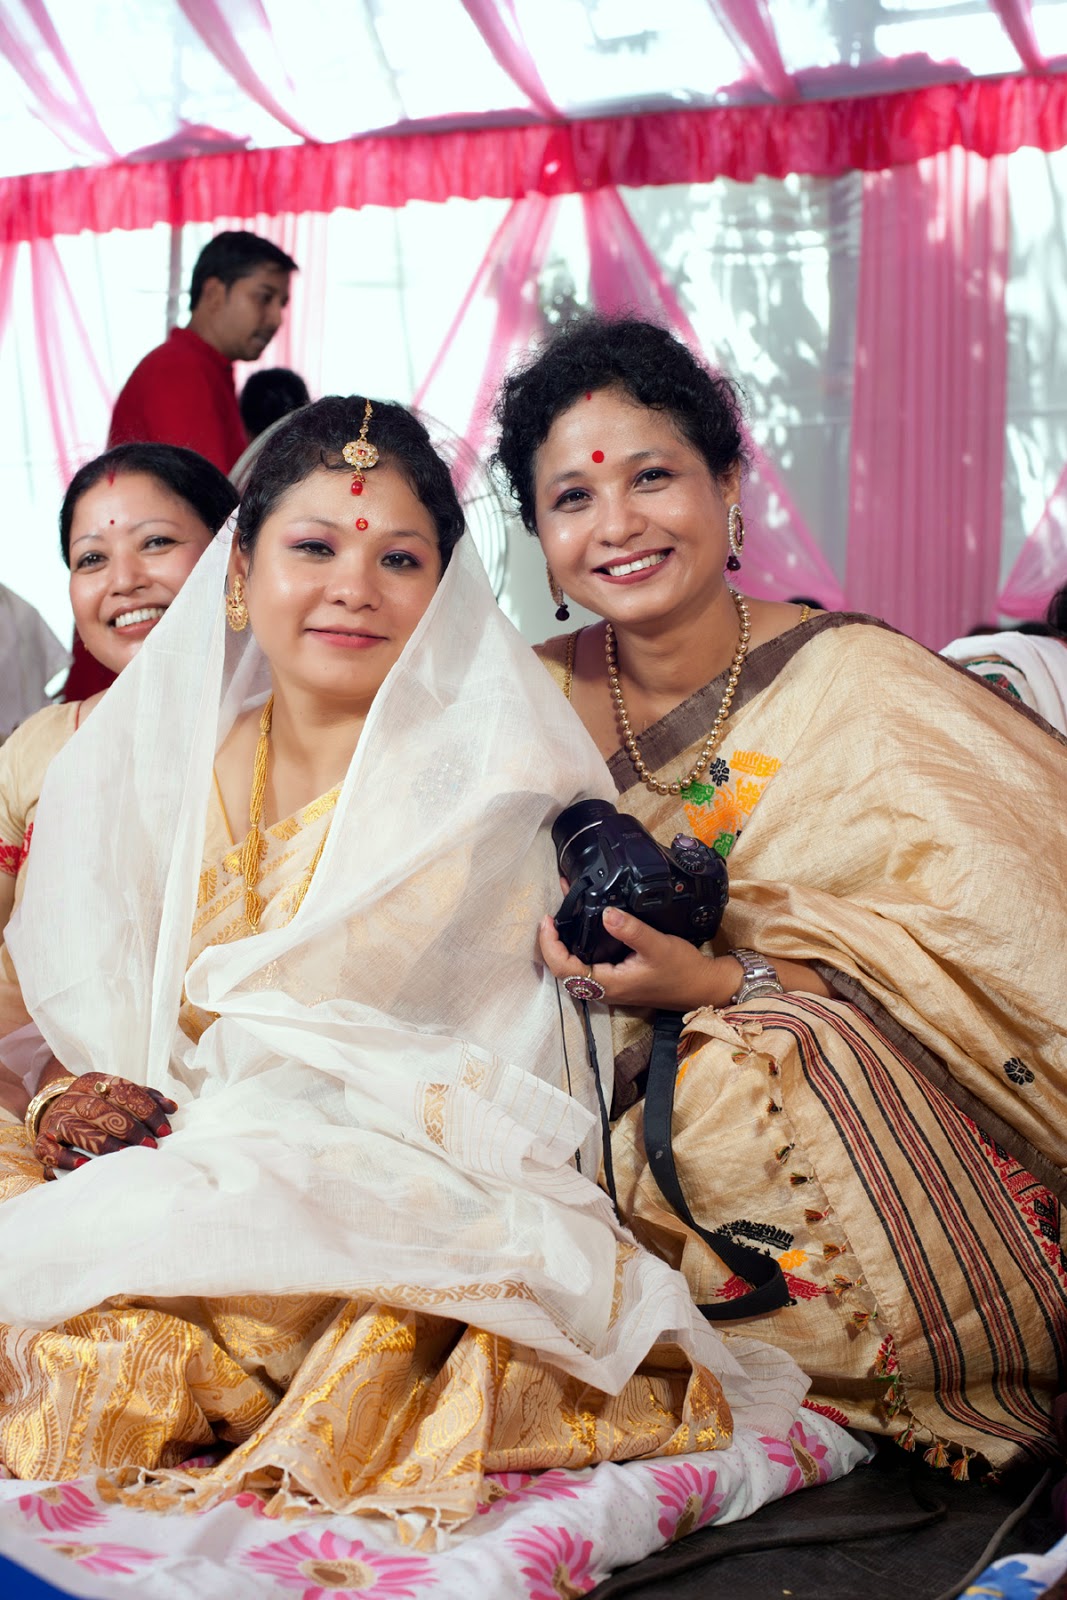 Assamese wedding / Asomiya biya / Traditional north east wedding - YouTube